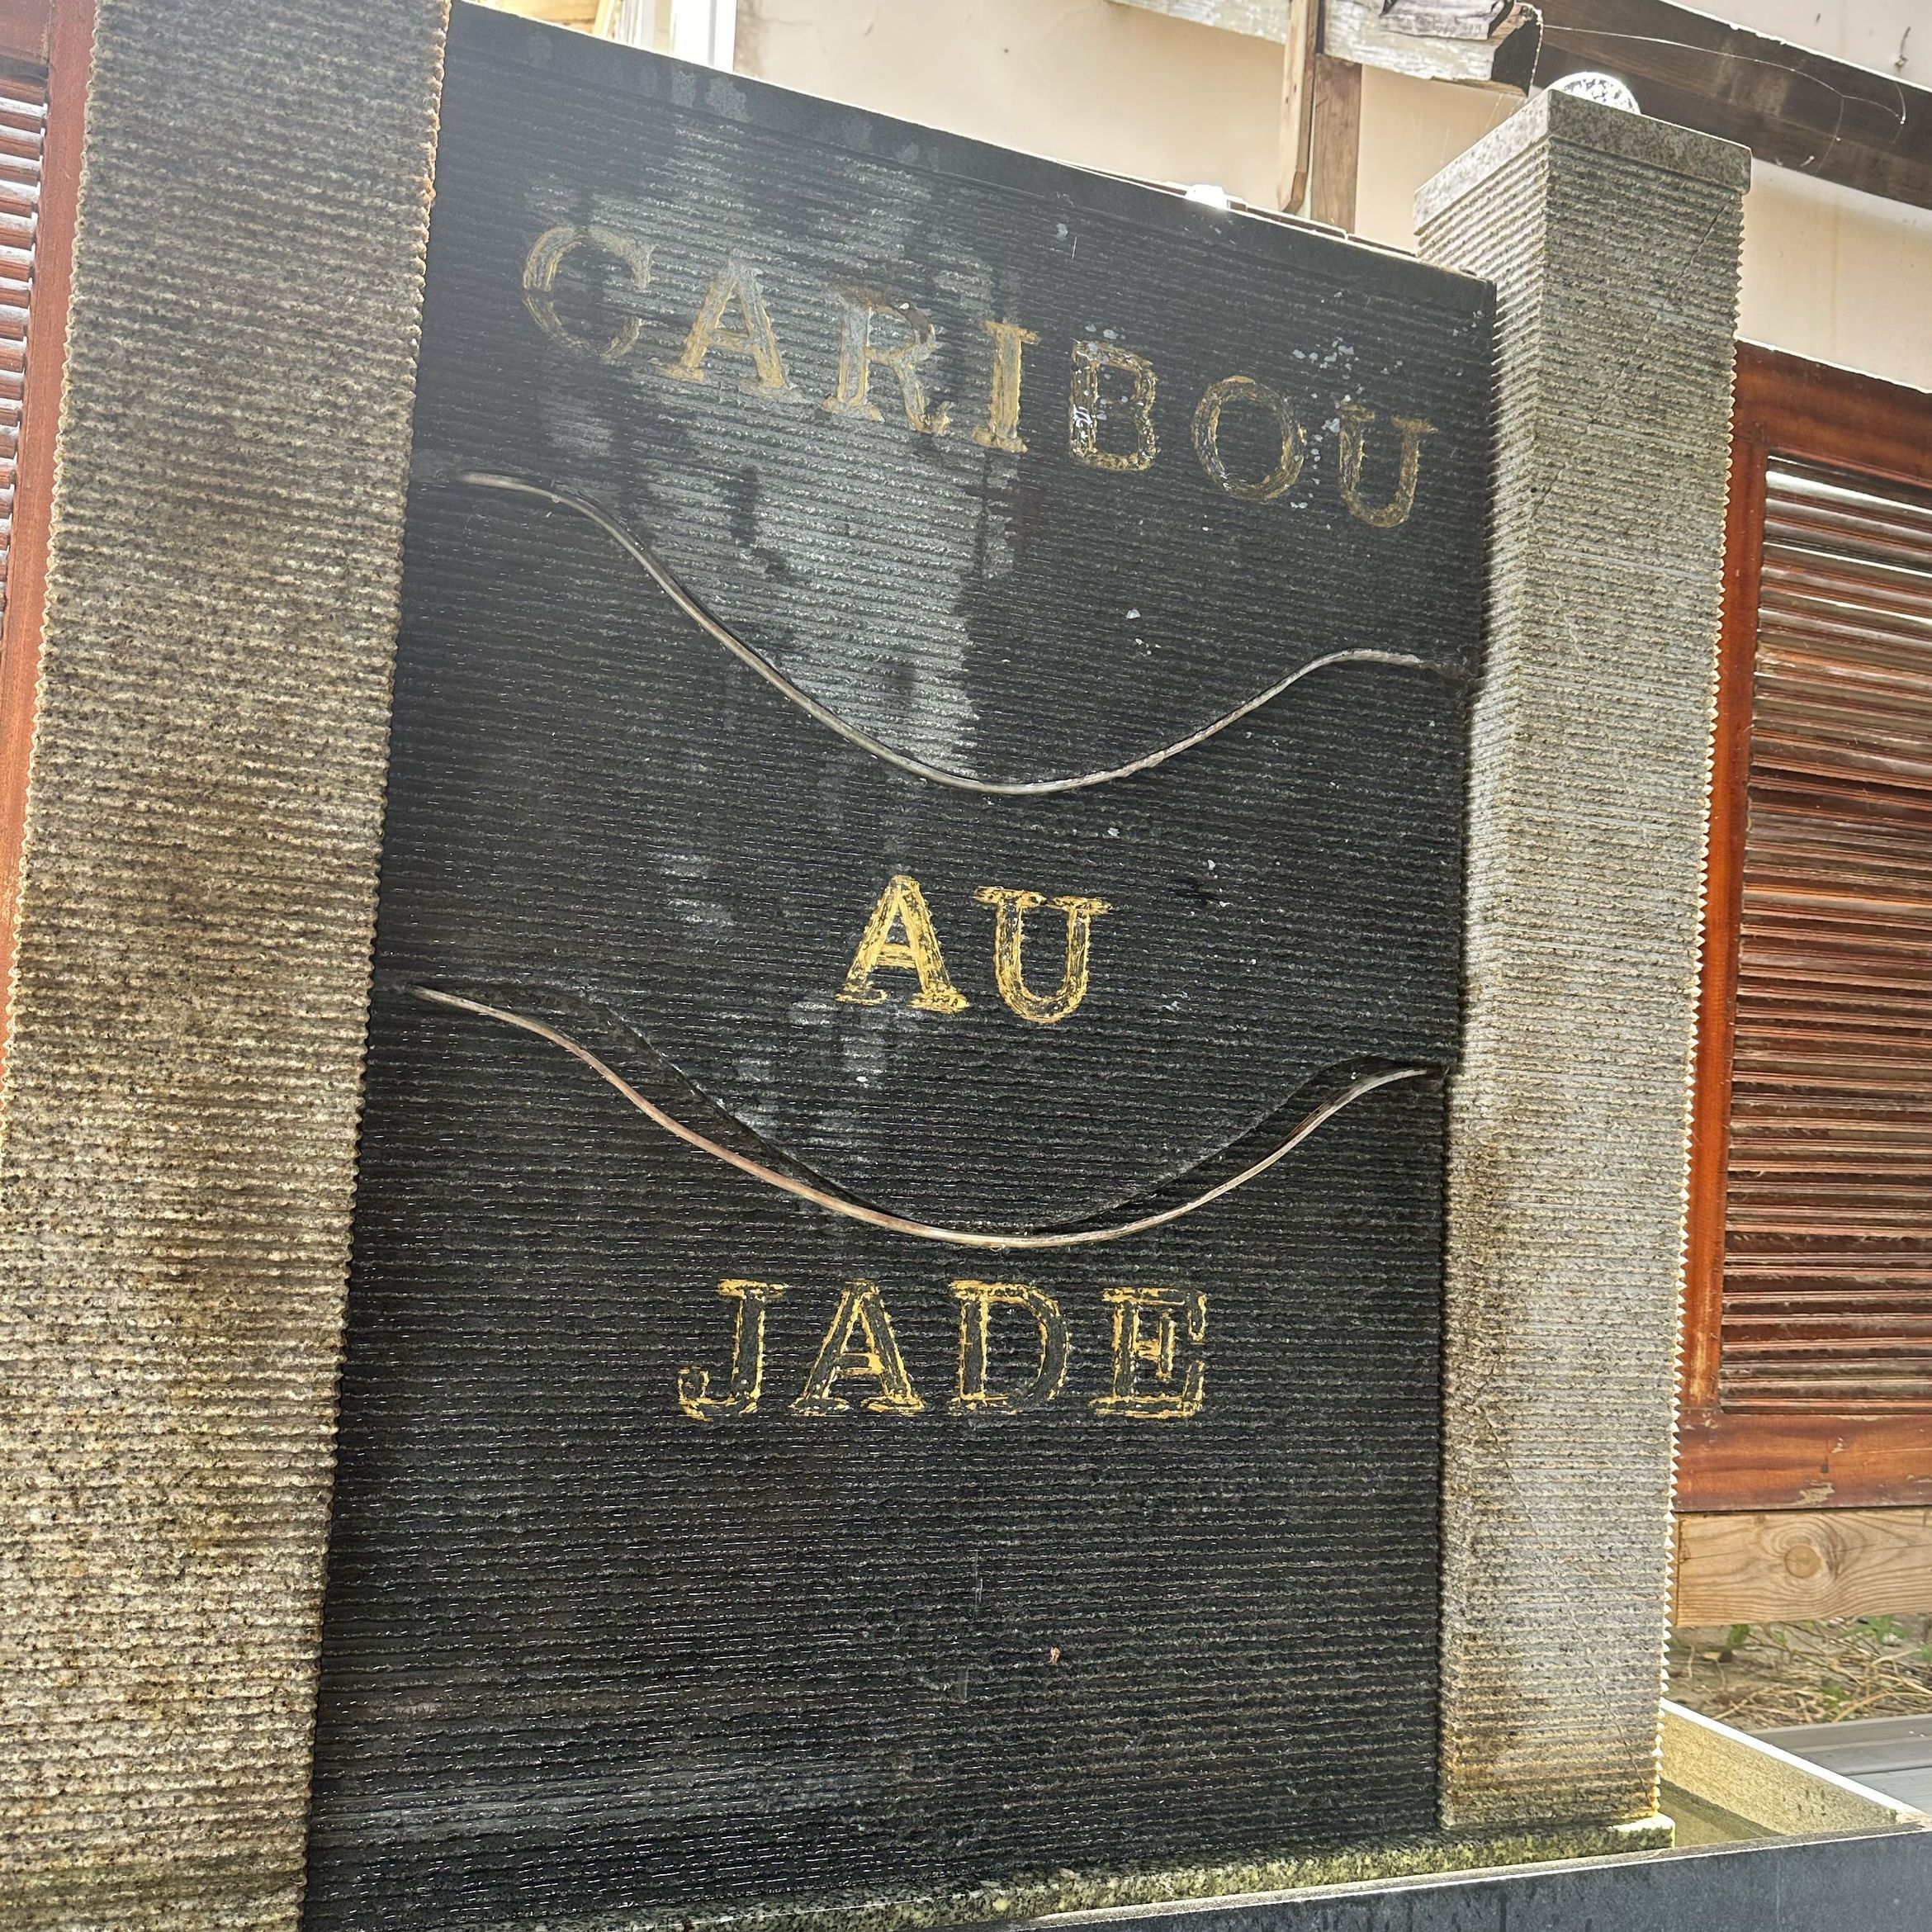 JADE INSTITUT BANDRELE, Boulevard Moida Said, 1565, 97660, Bandrele